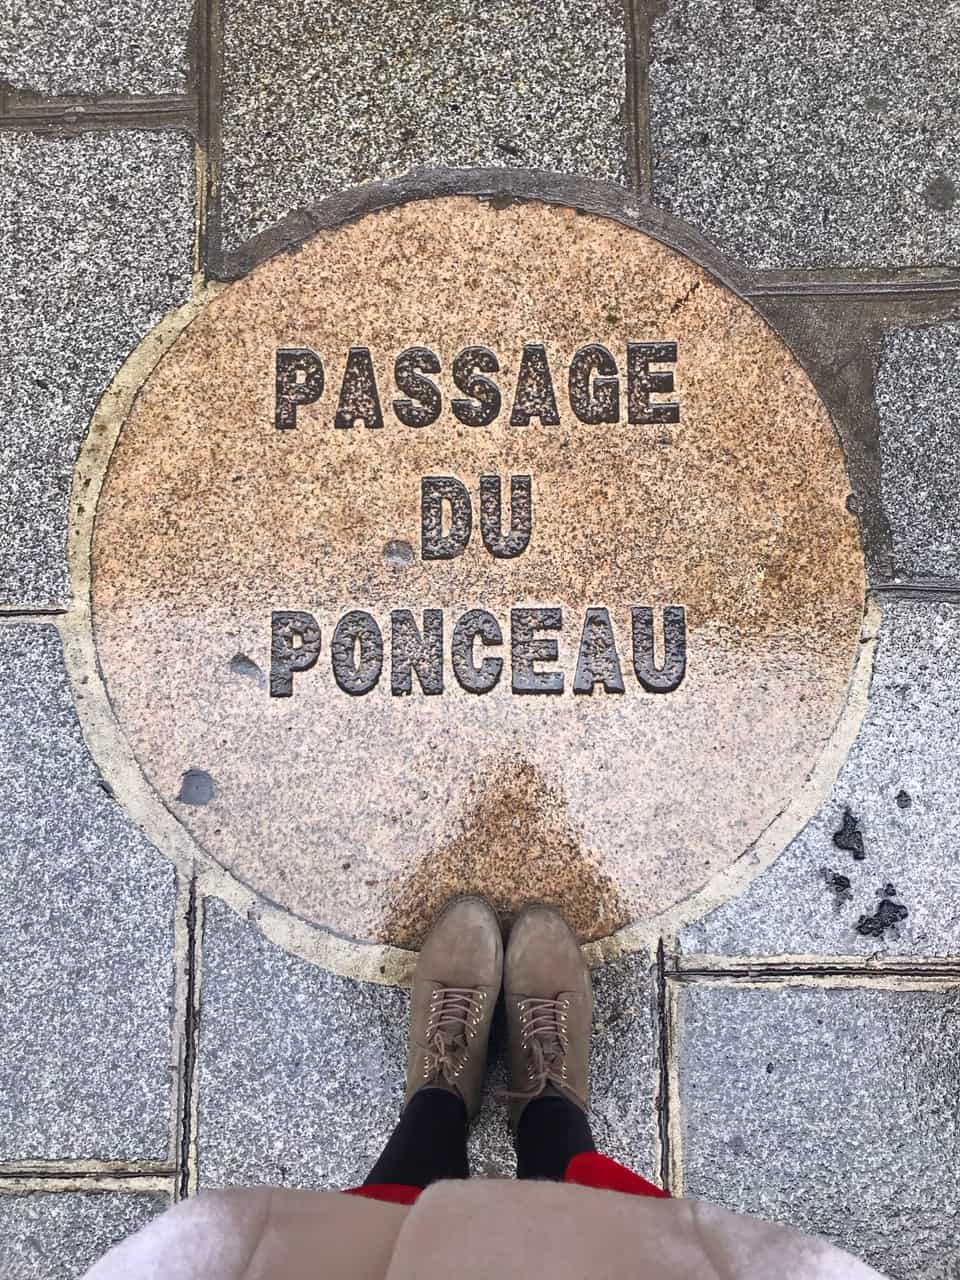 Passage du Ponceau sign outside of Paris shopping galerie 